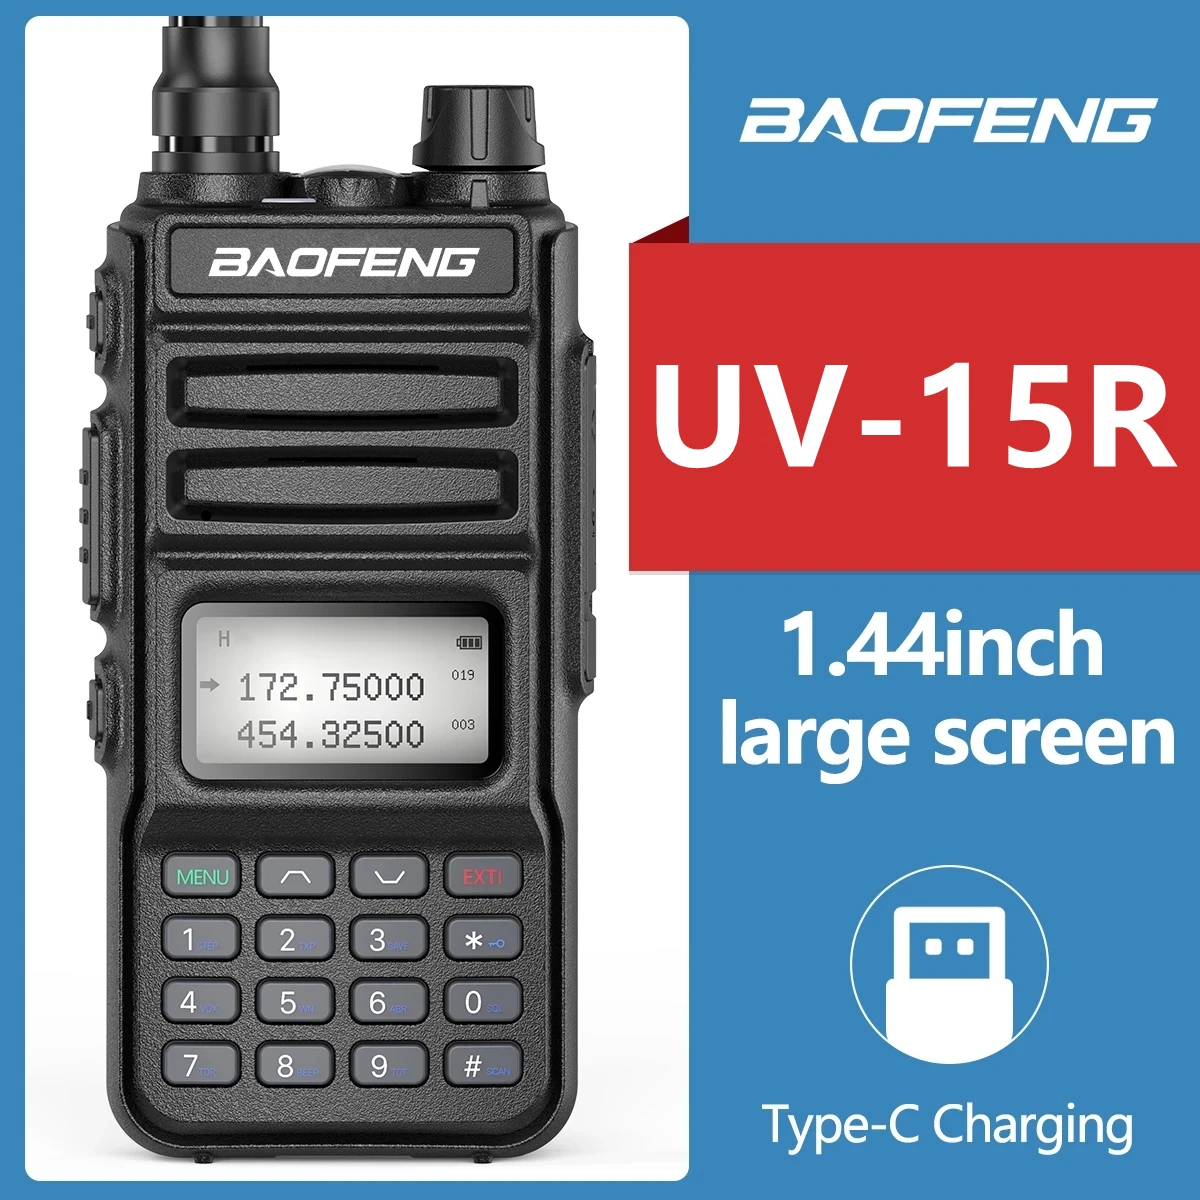 

Baofeng UV-15R Walkie Talkie 10W High Power 999 Channel Dual Band UHF VHF Radios Transmitter USB Charger UV-10R Two Way Radio